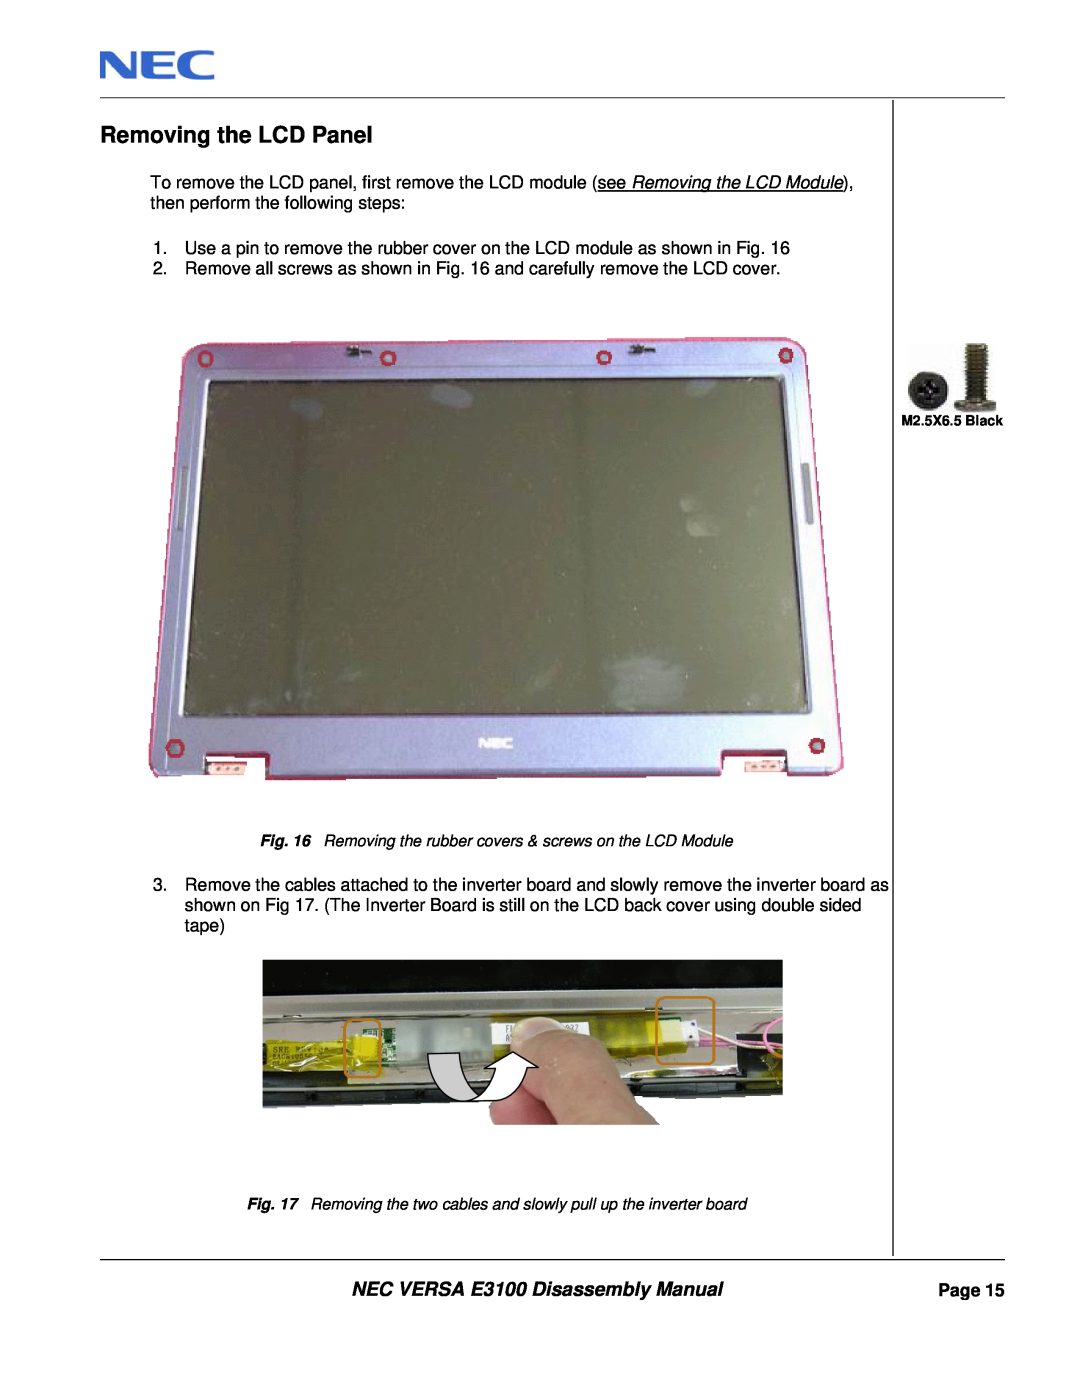 NEC manual Removing the LCD Panel, NEC VERSA E3100 Disassembly Manual 